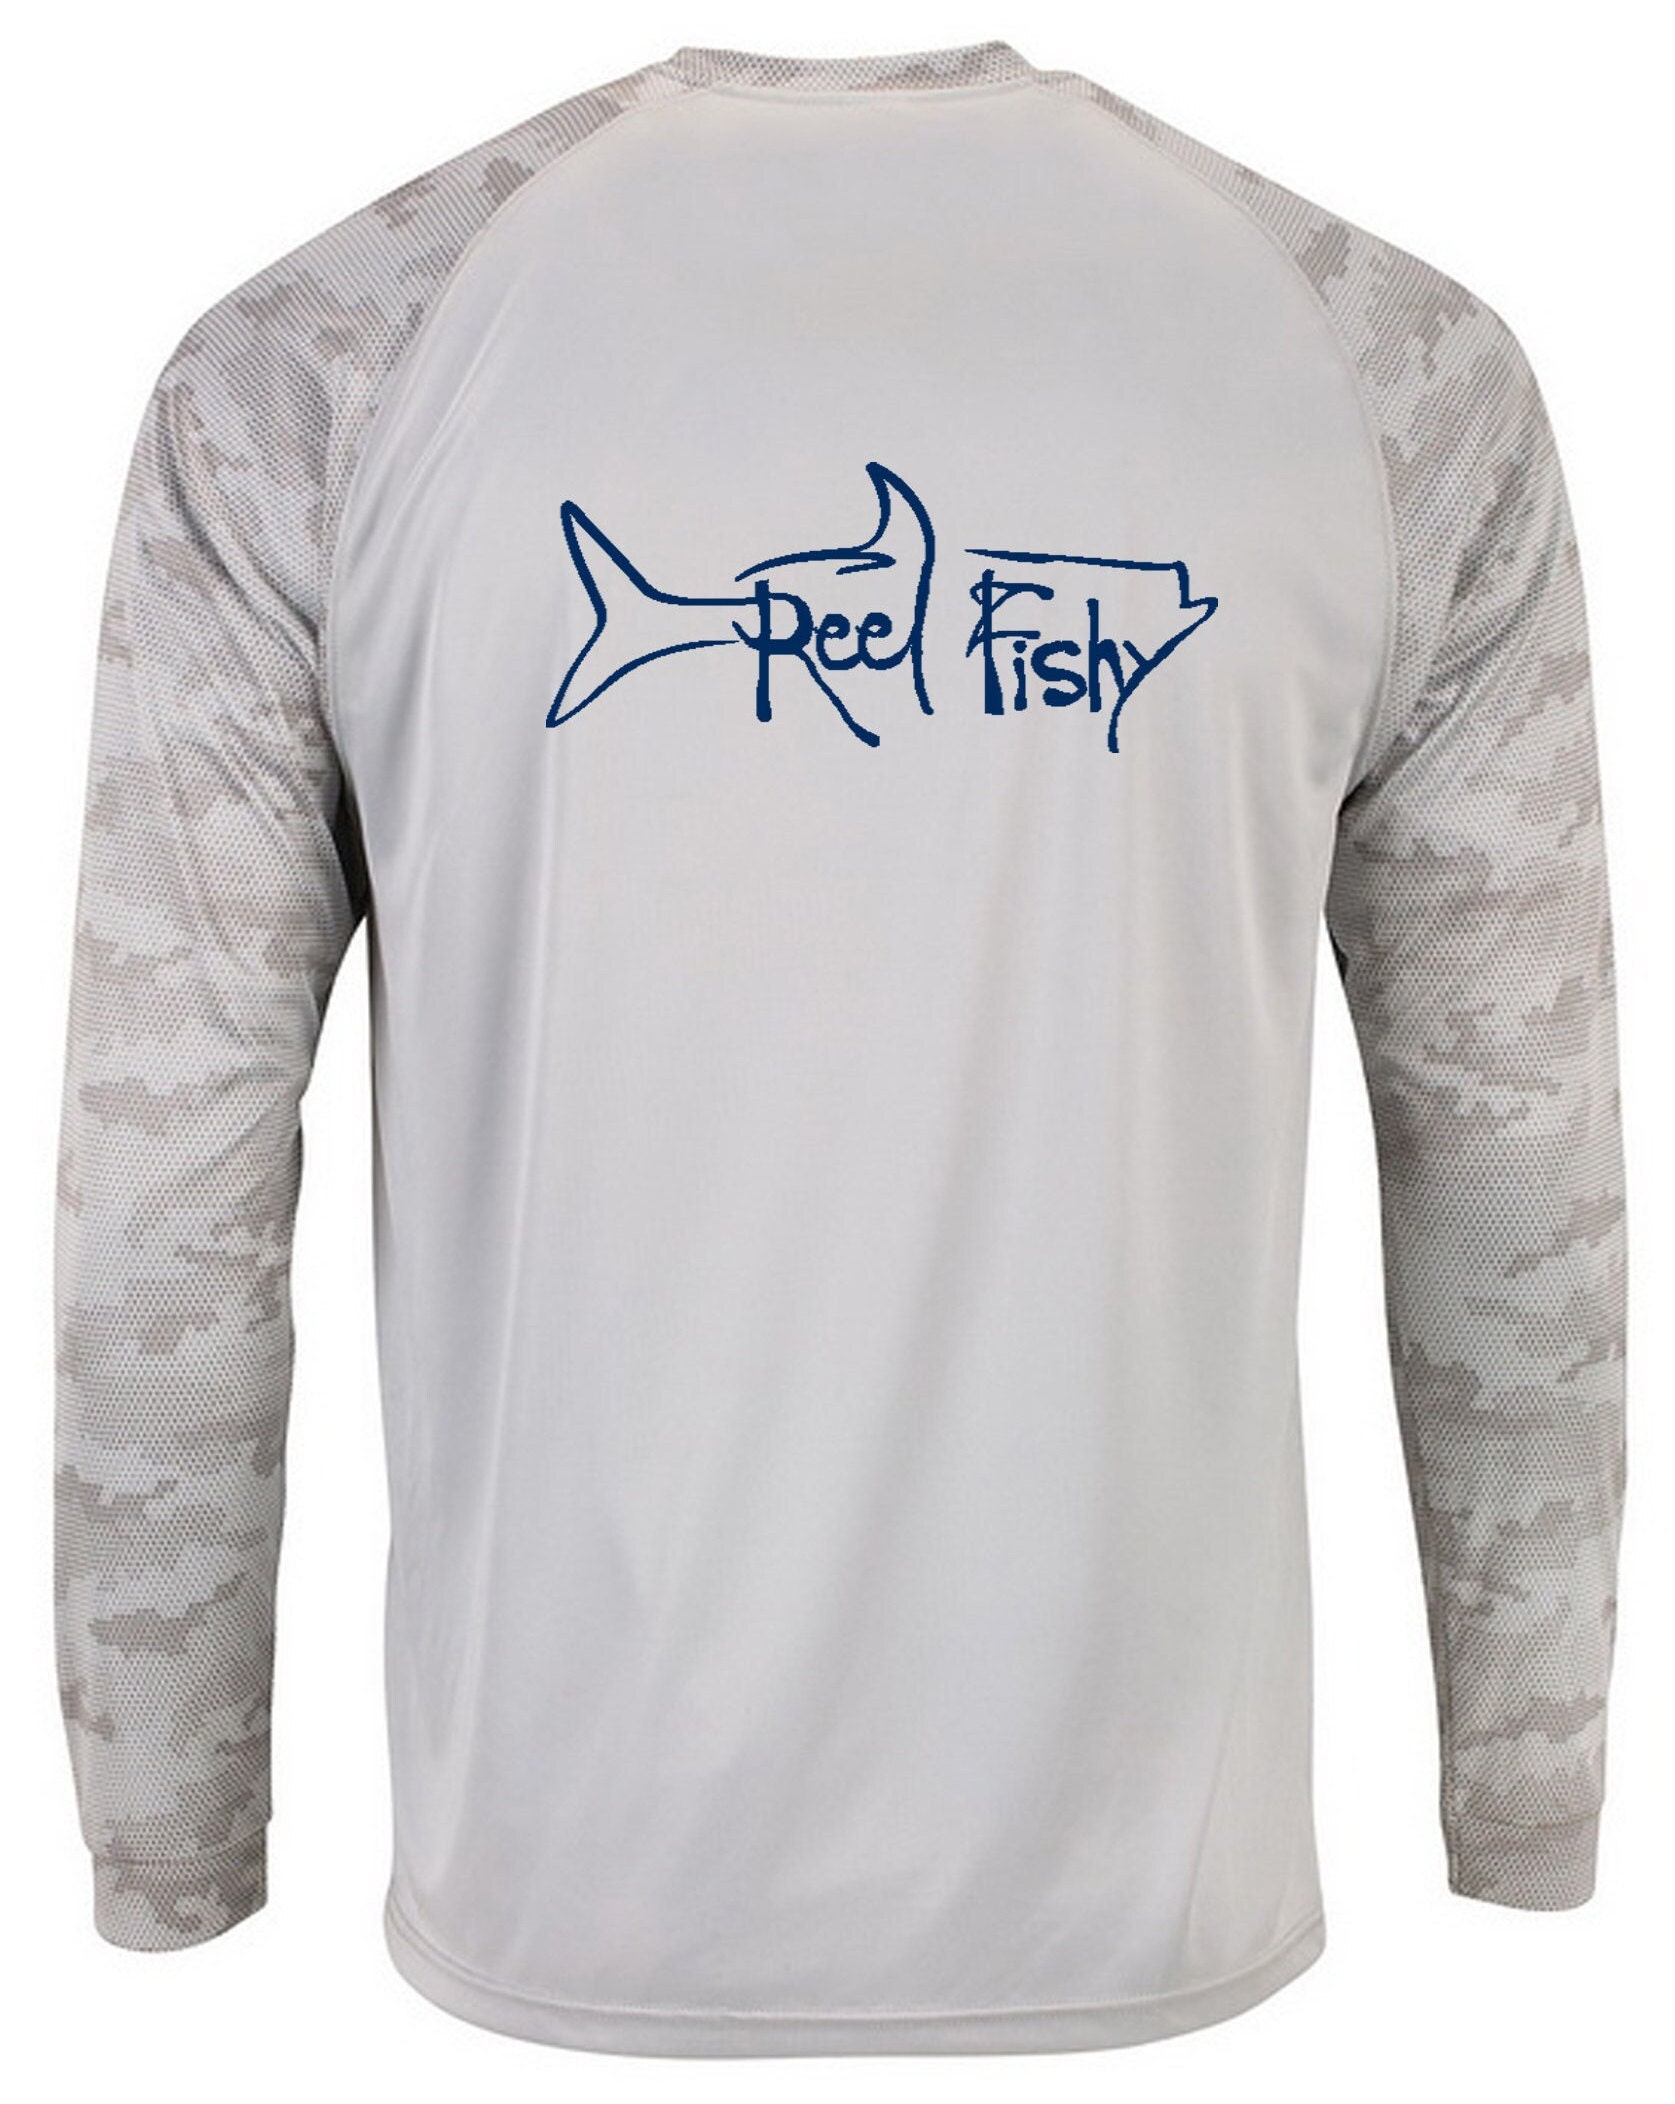 Tarpon Digital Camo Performance Dry-Fit Fishing Long Sleeve Shirts, 50+ UPF Sun Protection, Men's Tarpon SPF Fishing Shirt, Ladies UV Shirt